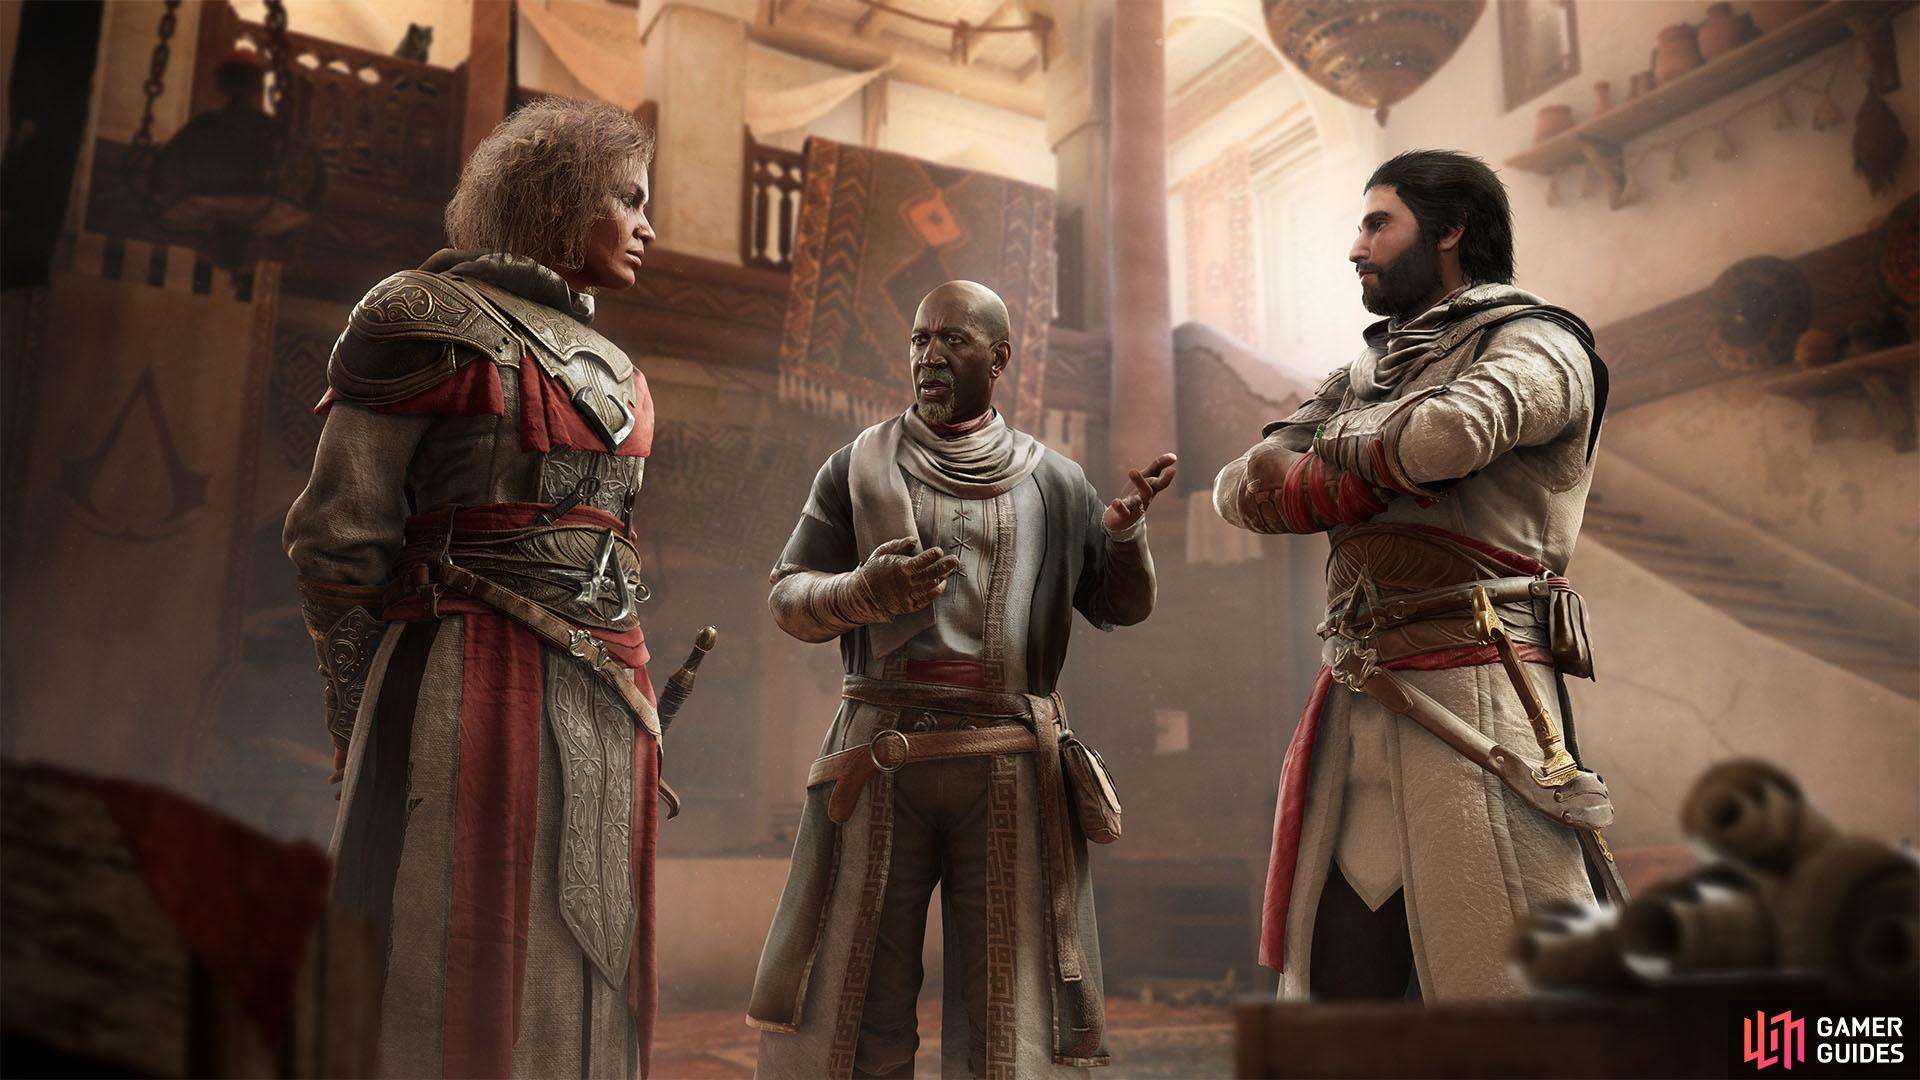 Assassin's Creed Origins The Hidden Ones DLC Trophy Guide & Roadmap